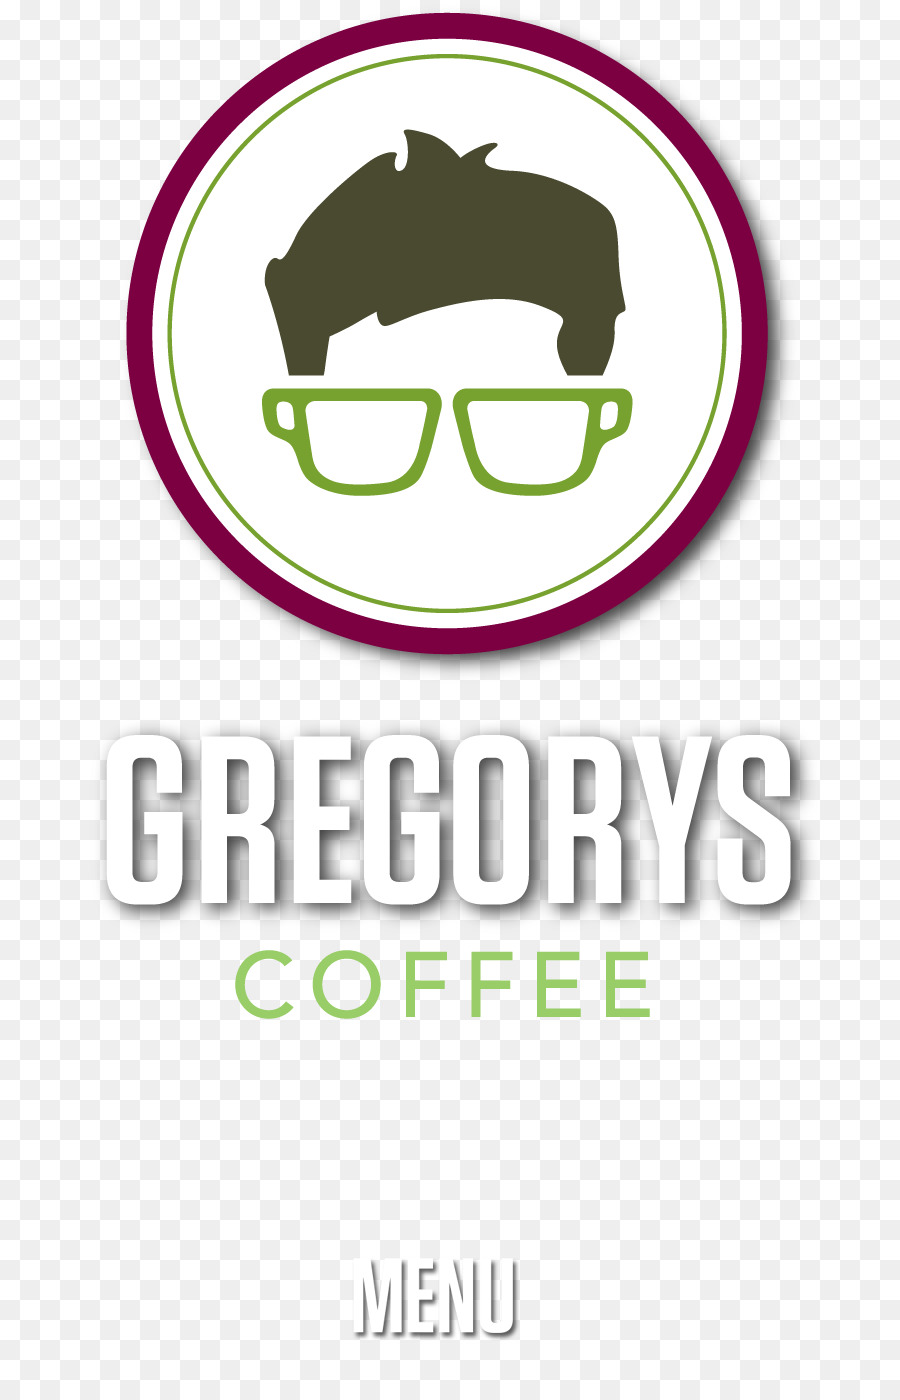 Gregorys Kaffee Cafe Frühstück Cappuccino - Kaffee